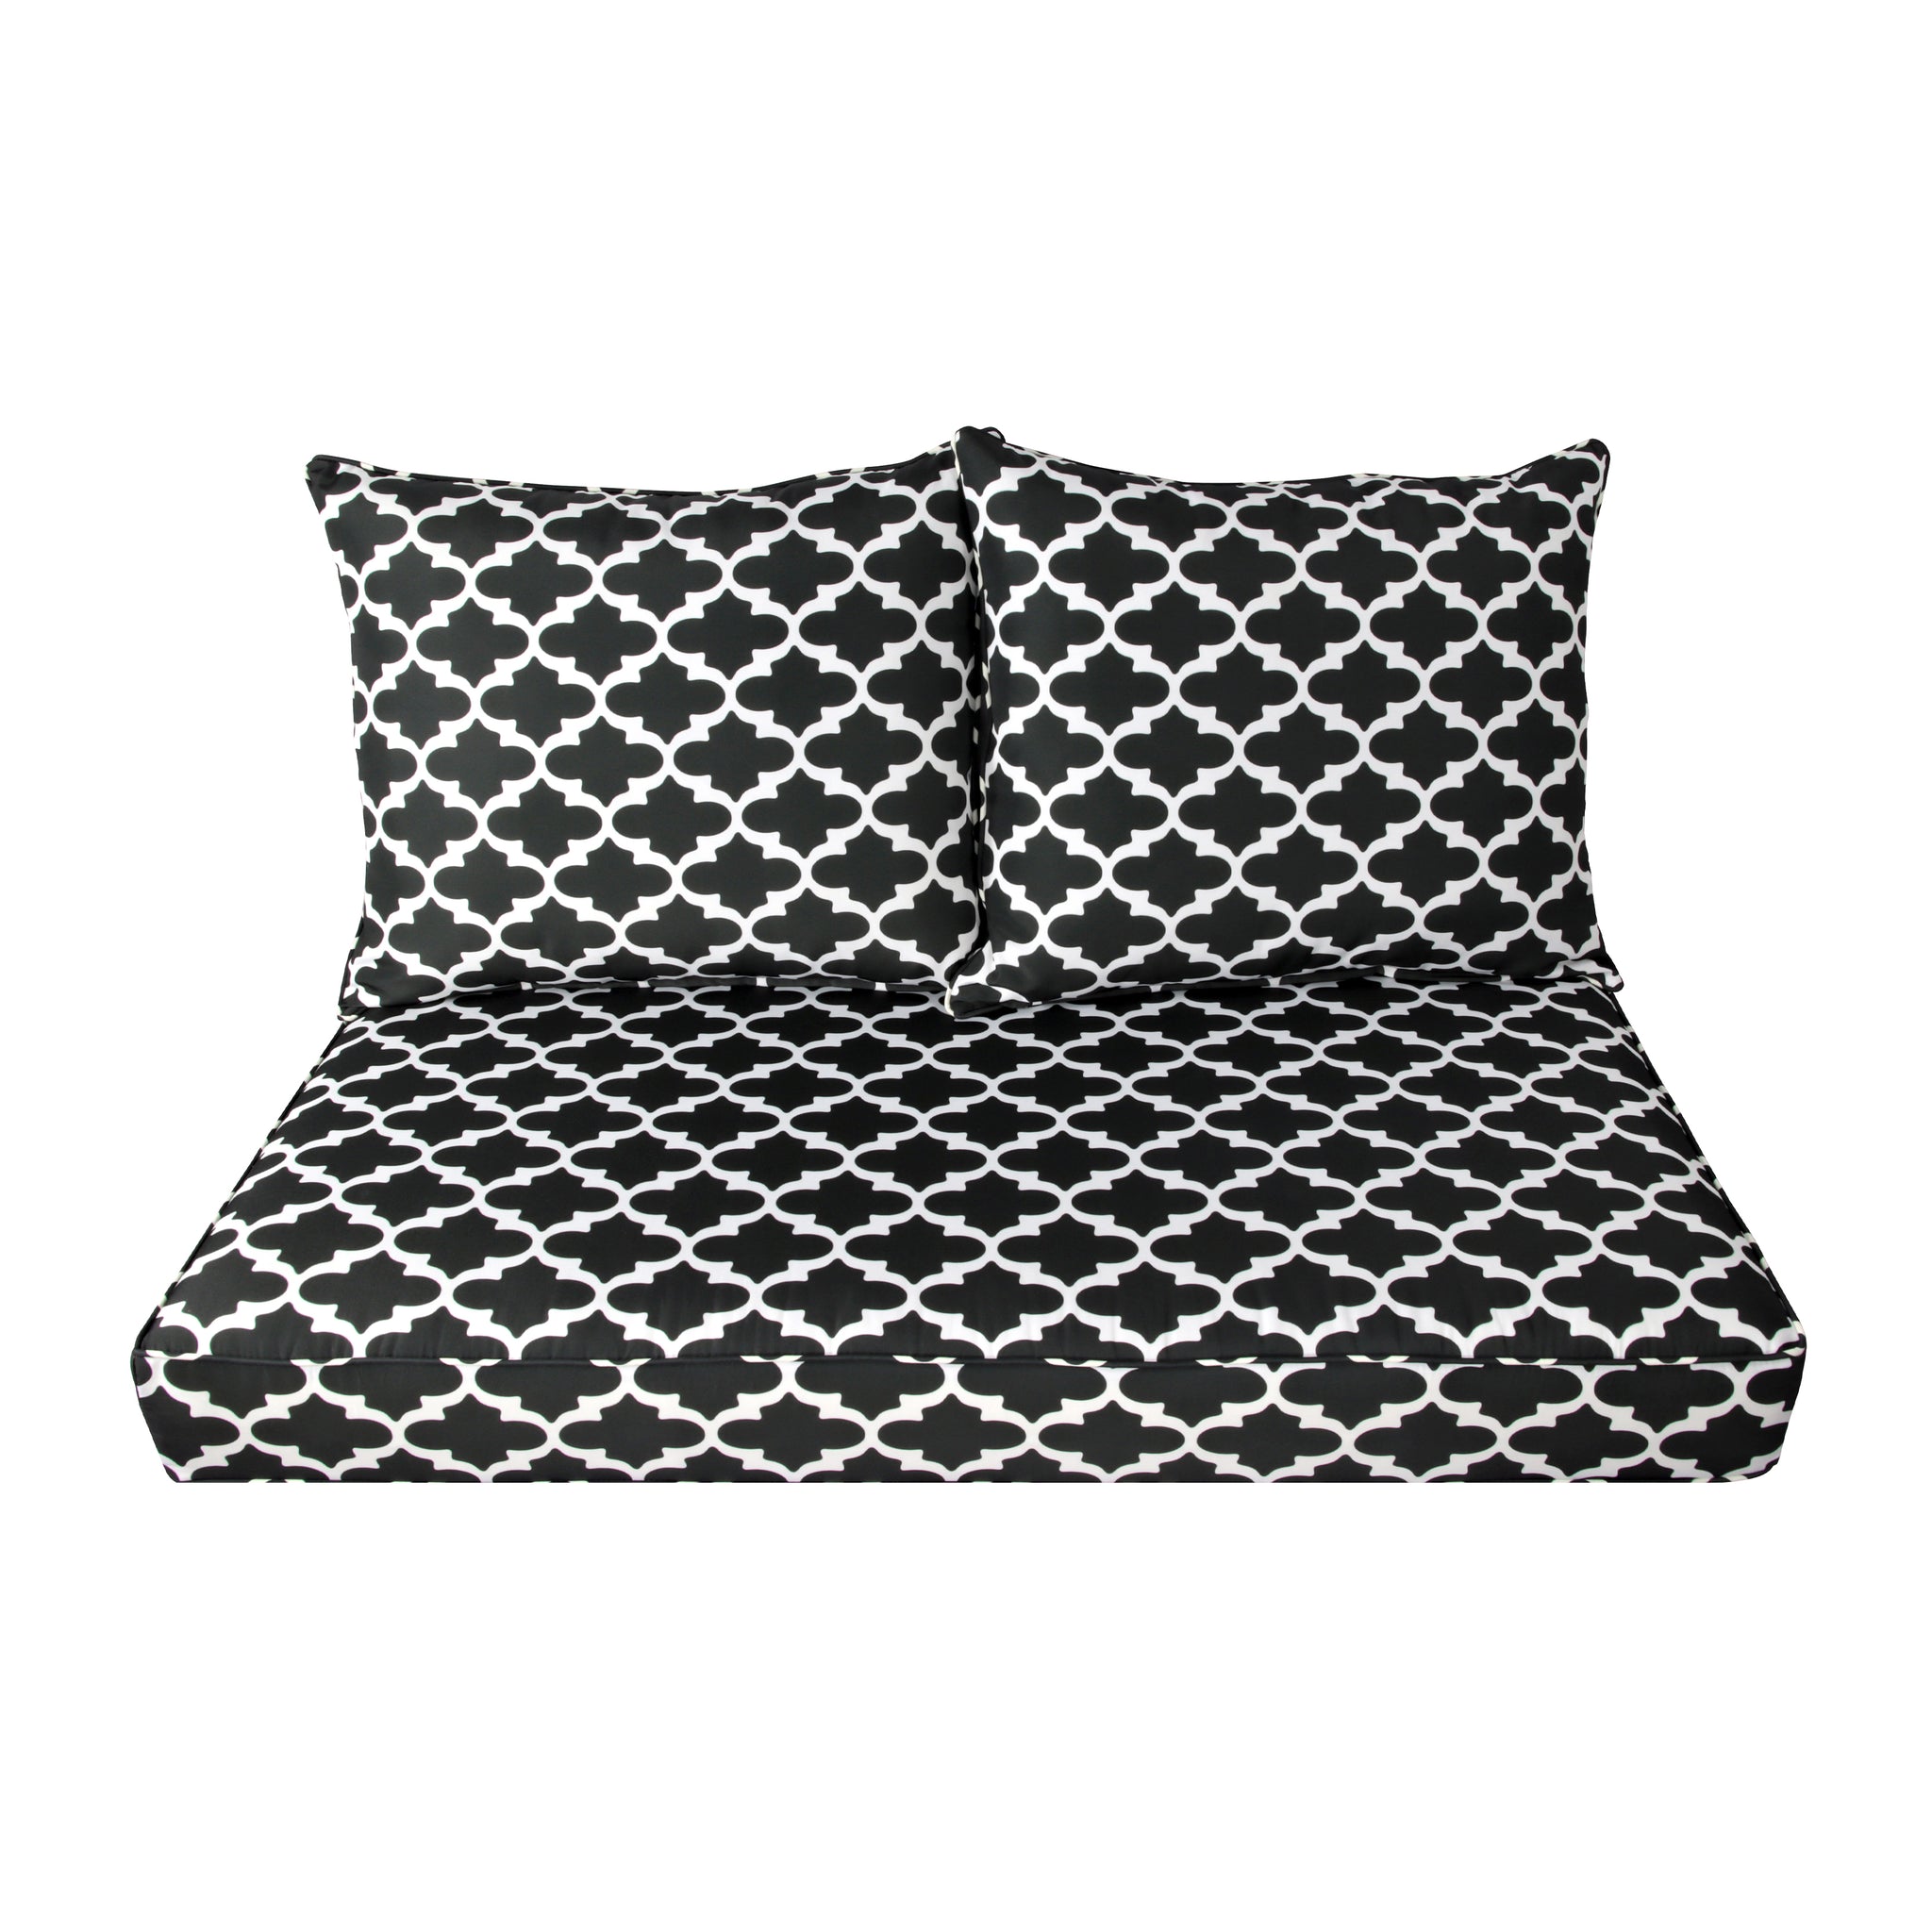 Patio Furniture Cushions Deep Seat Loveseat Cushion Black & White Flower